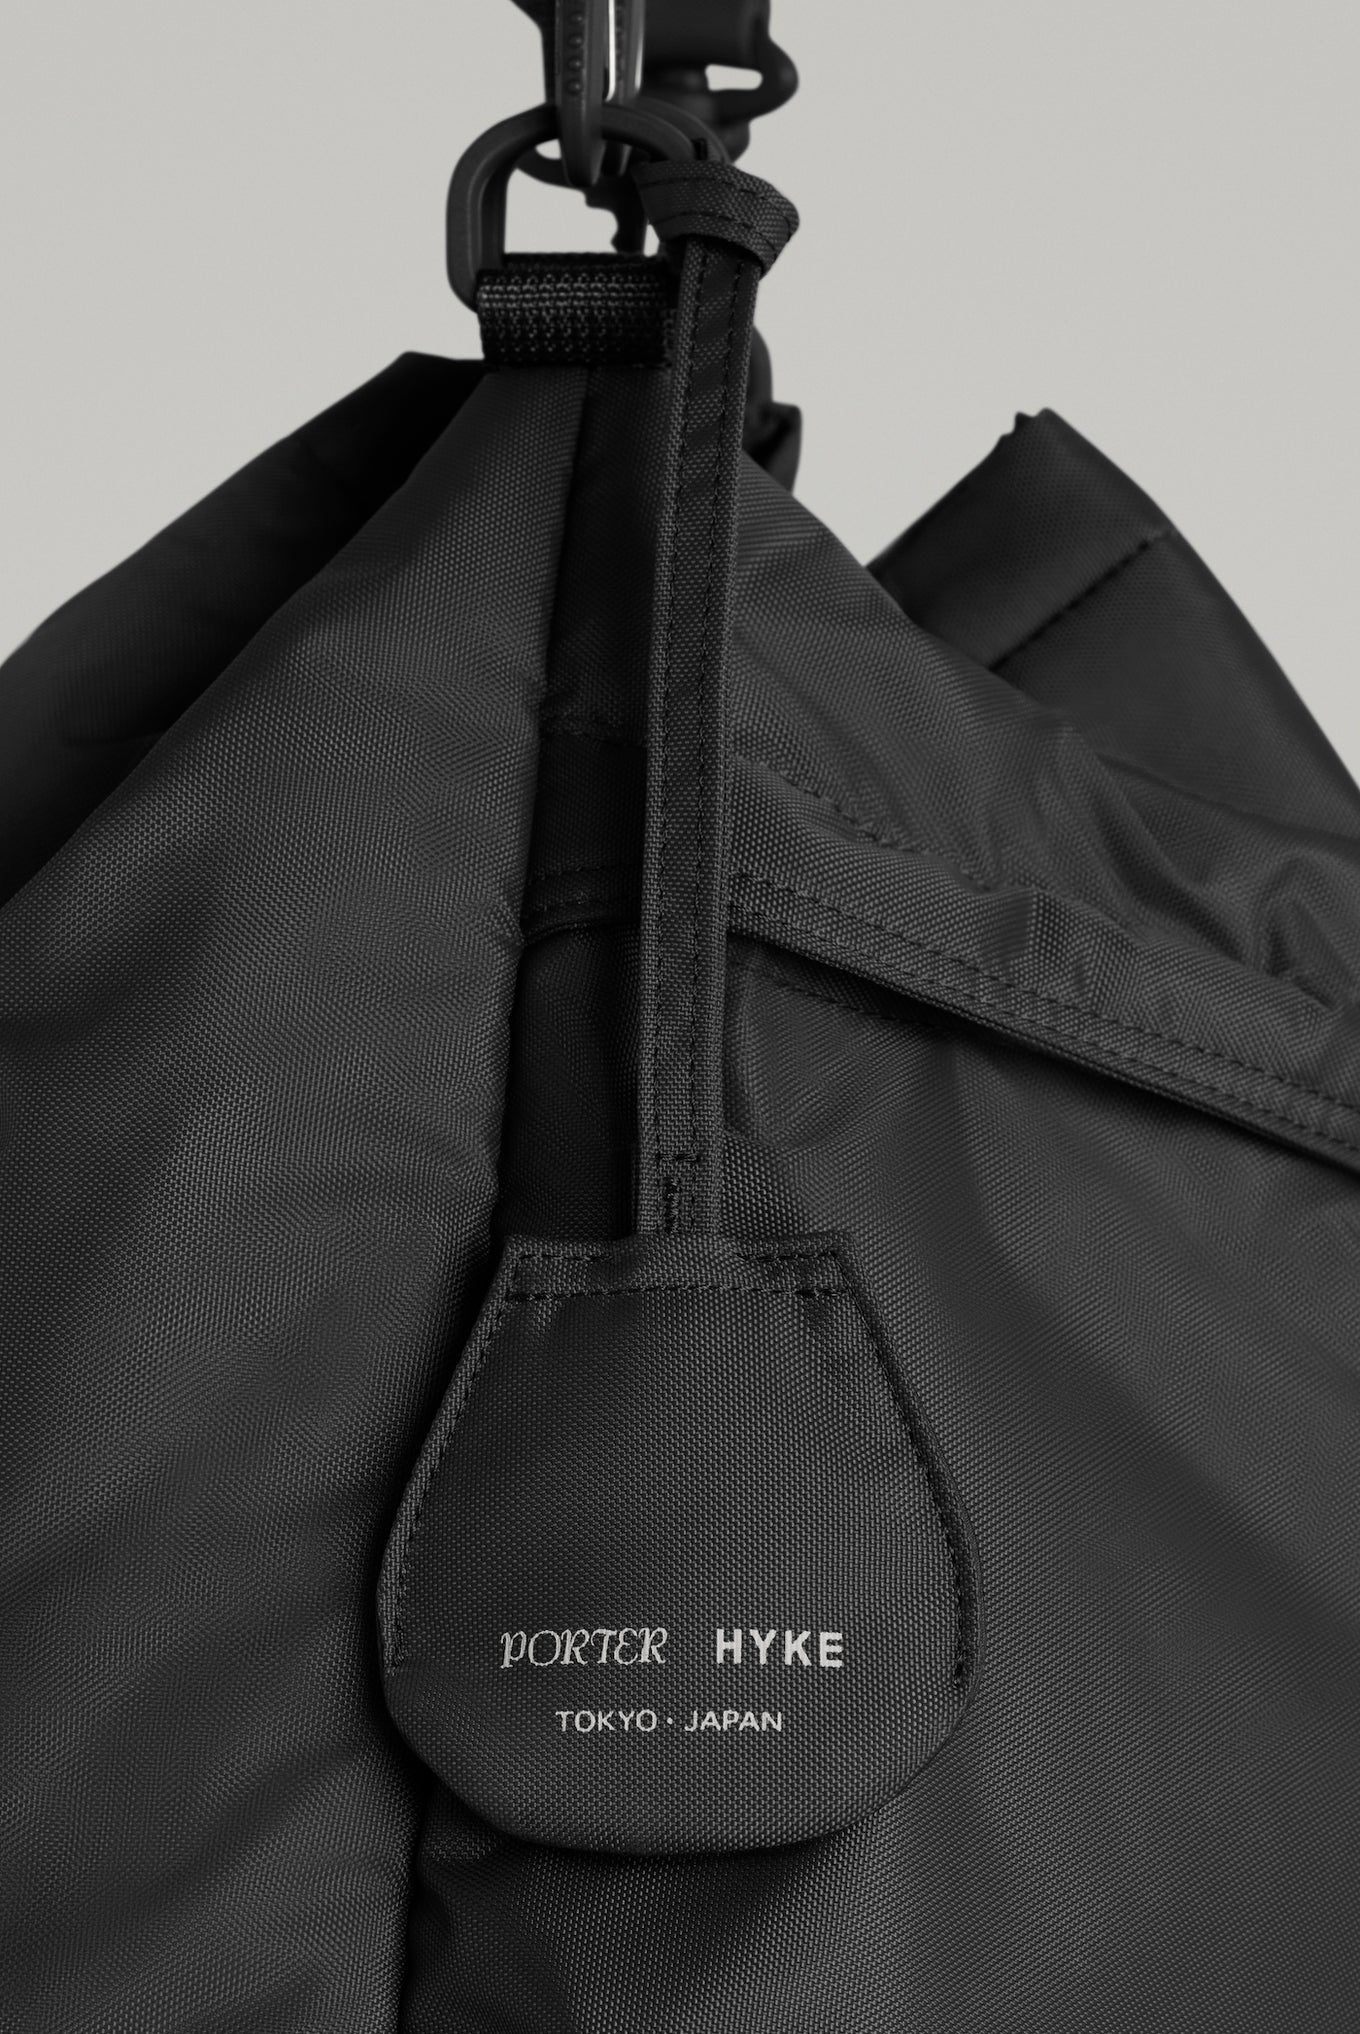 hyke porter 2WAY TOOL BAG SMALL 黒 - ショルダーバッグ